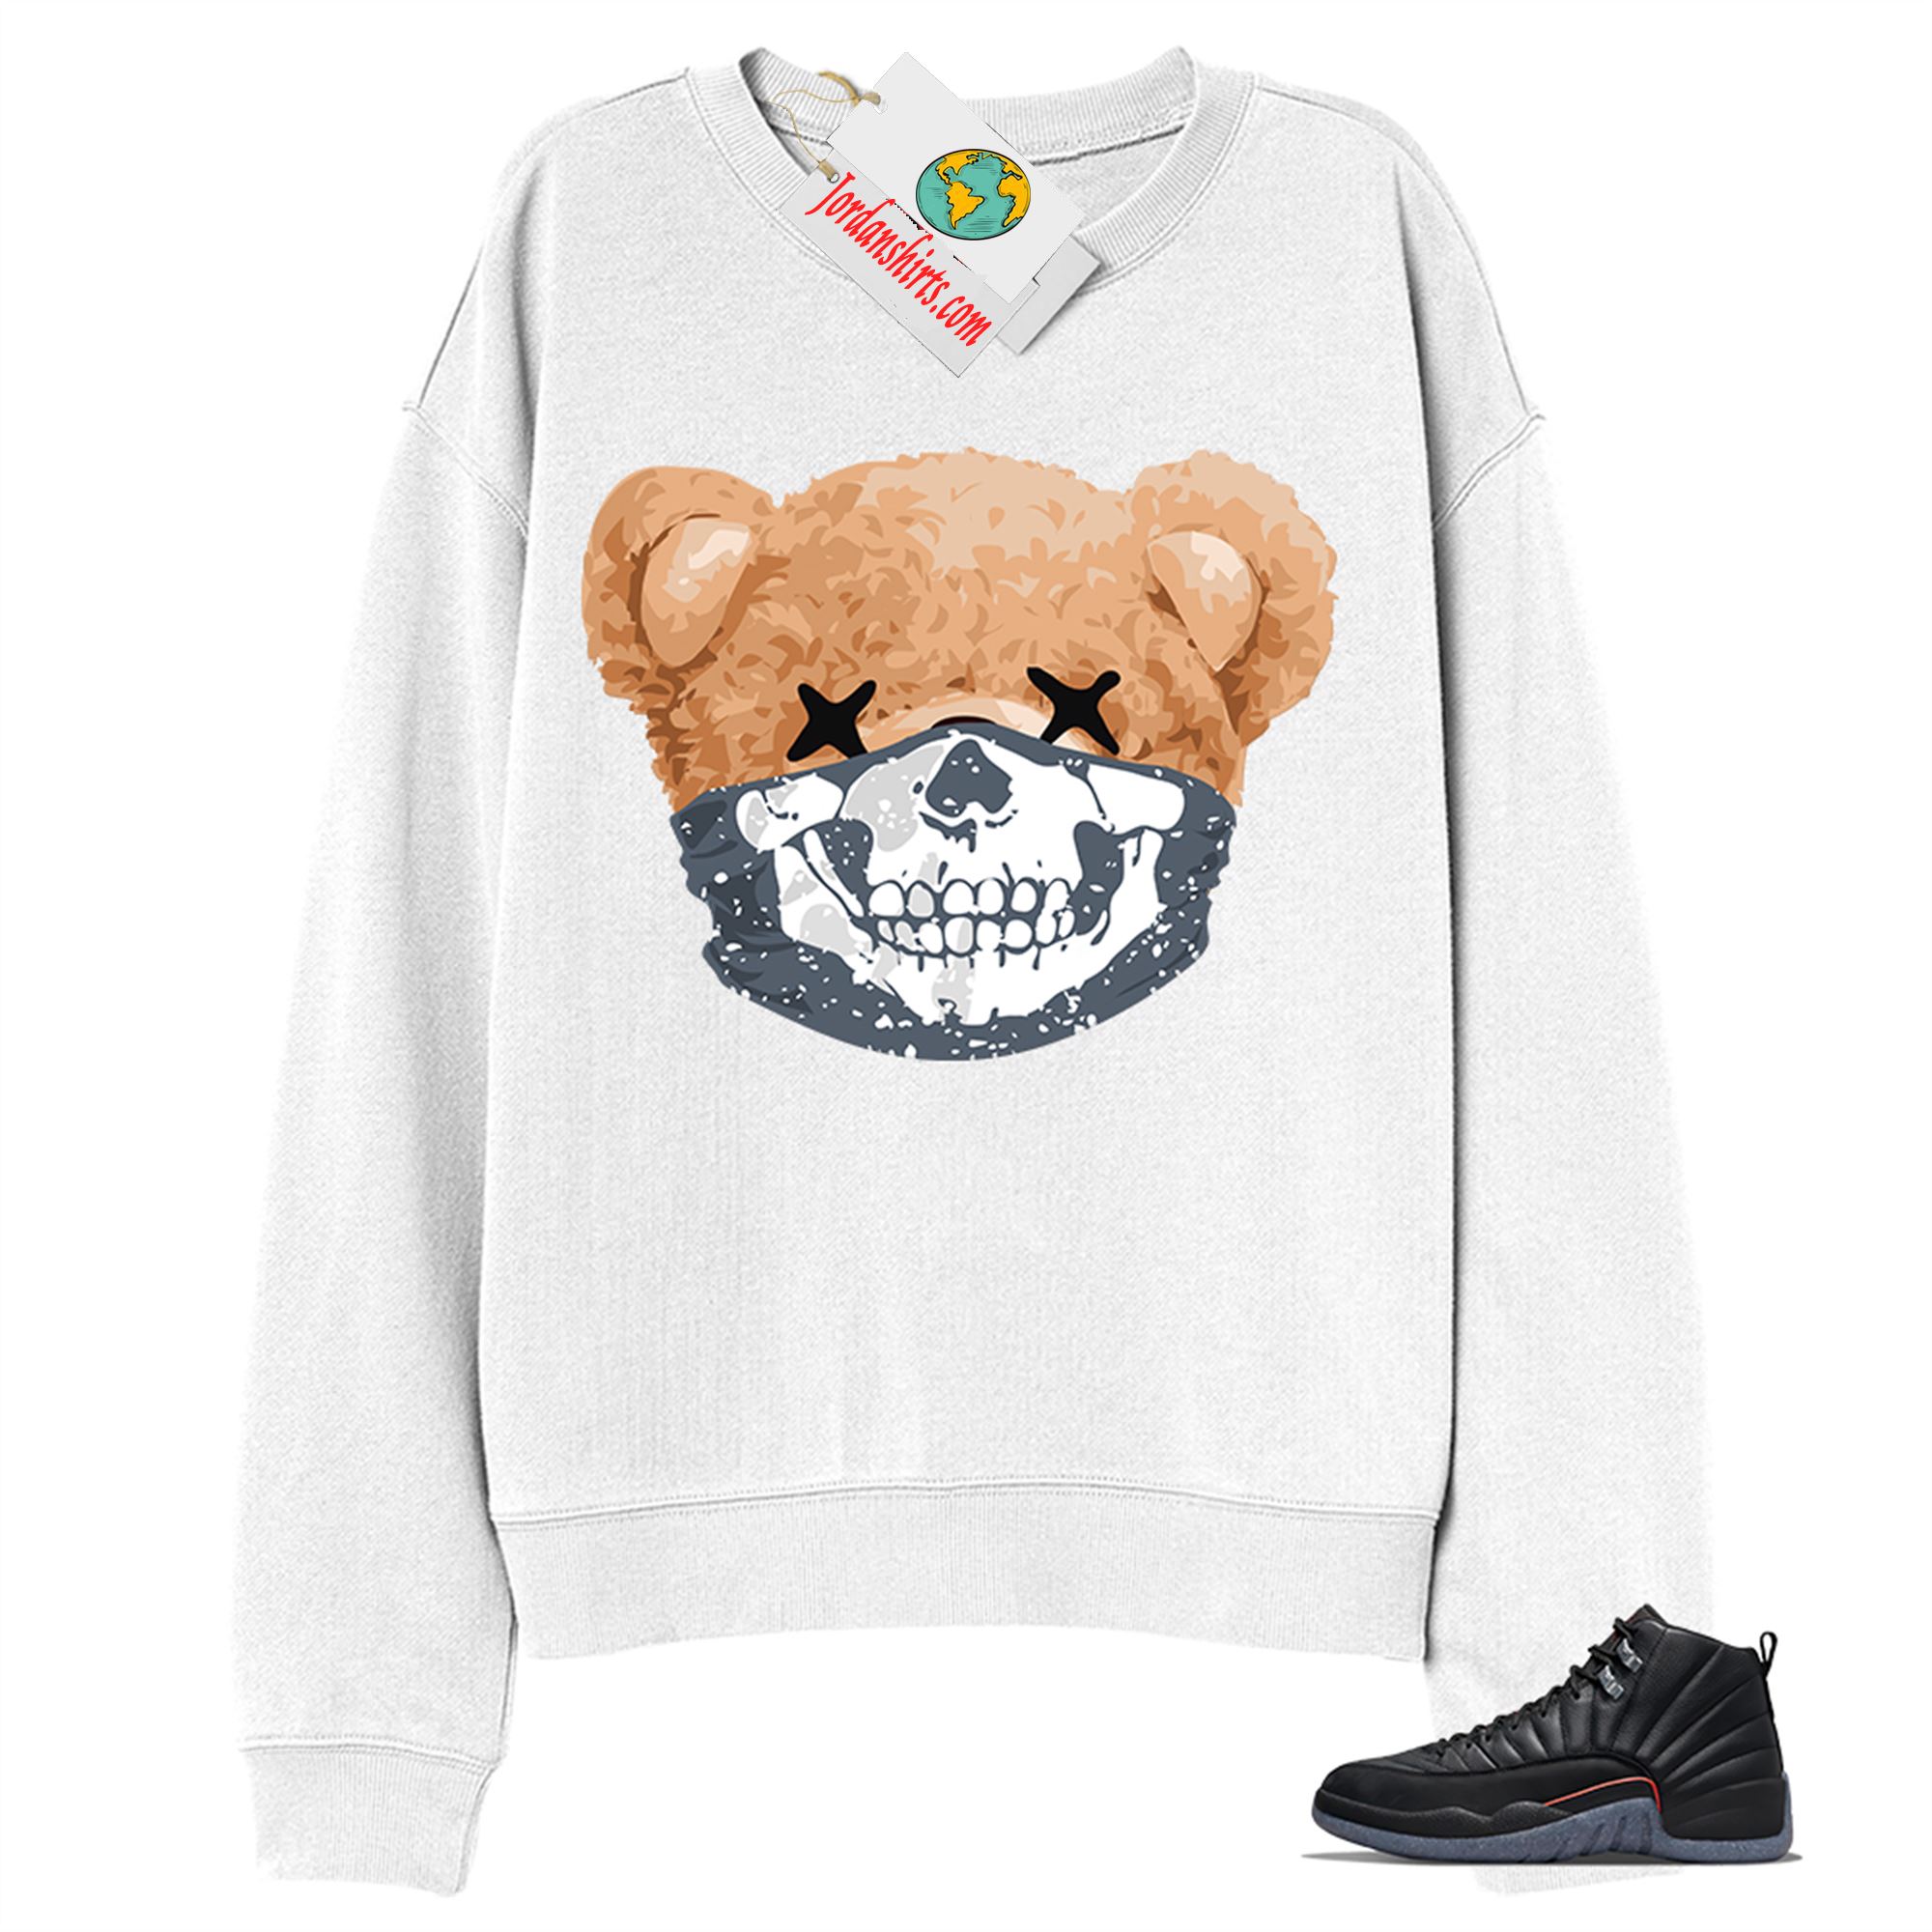 Jordan 12 Sweatshirt, Teddy Bear Skull Bandana White Sweatshirt Air Jordan 12 Utility Grind 12s Full Size Up To 5xl